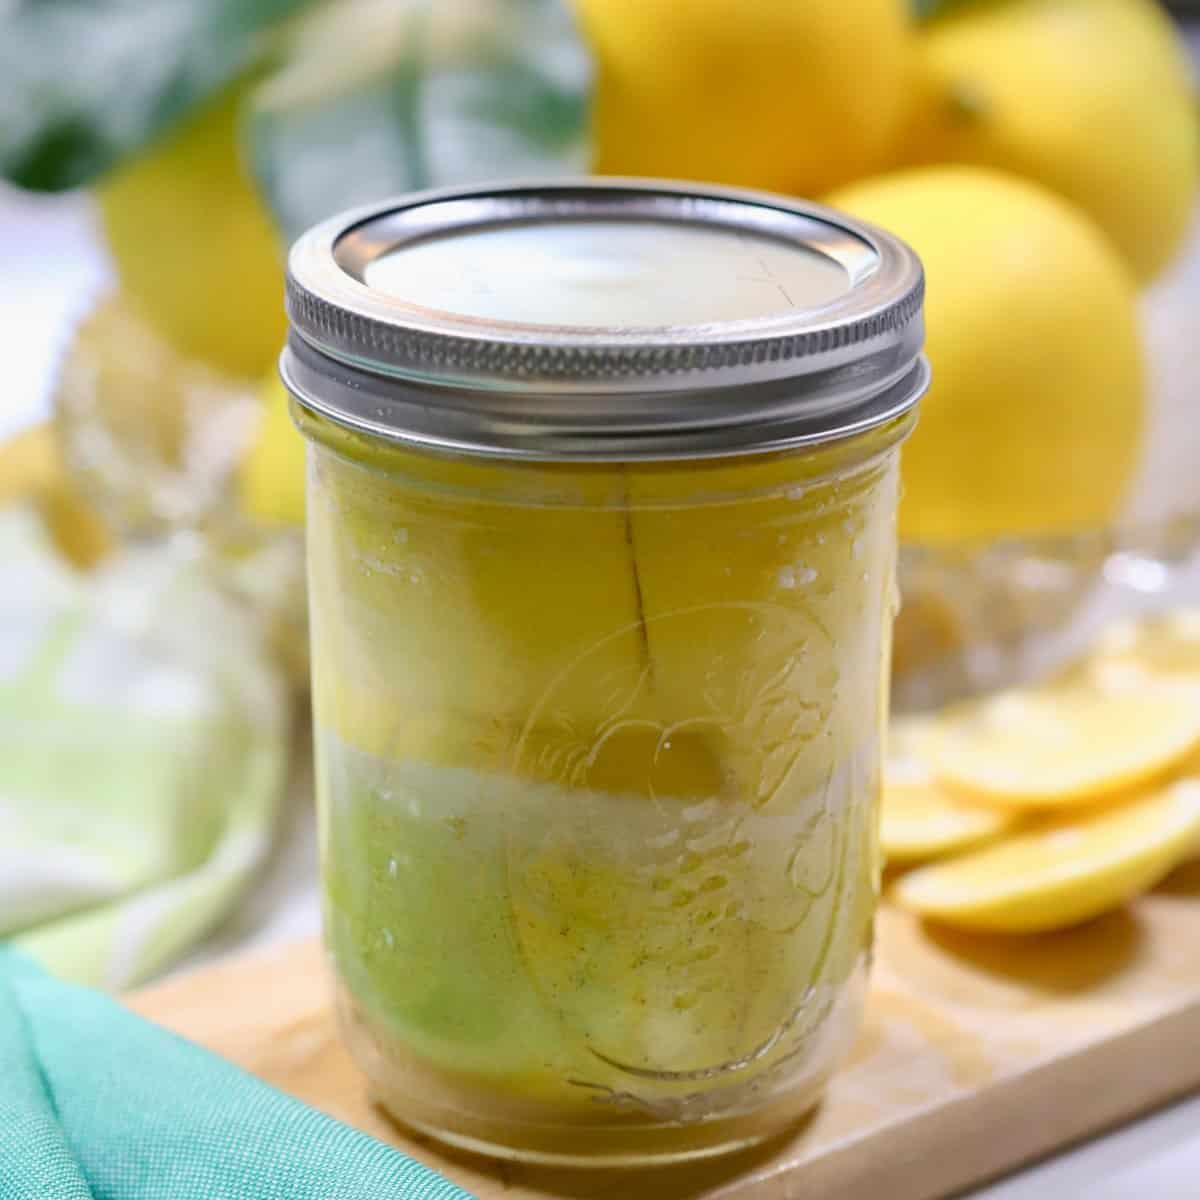 A jar of preserved lemons.